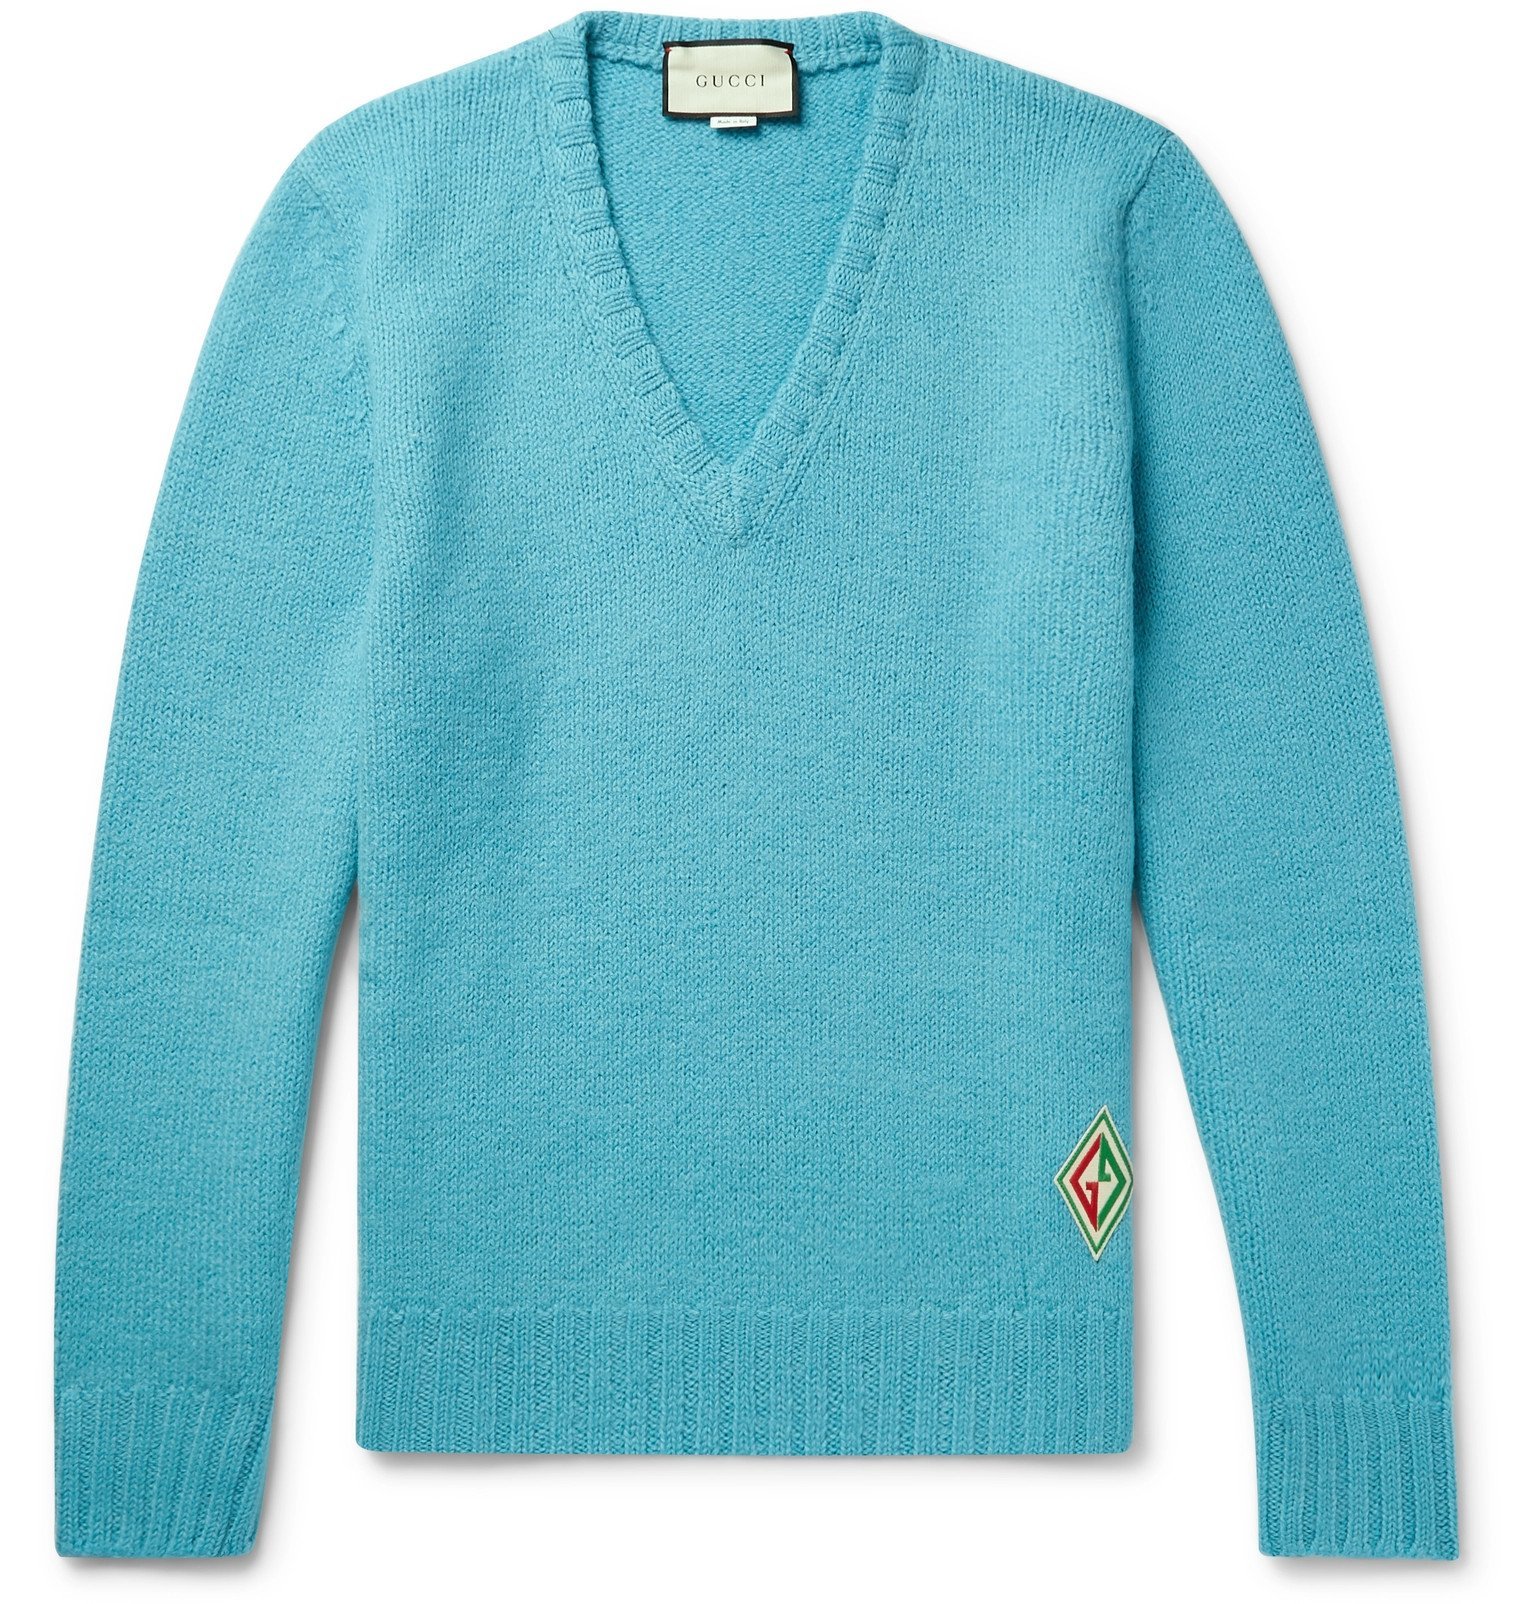 gucci sweater blue